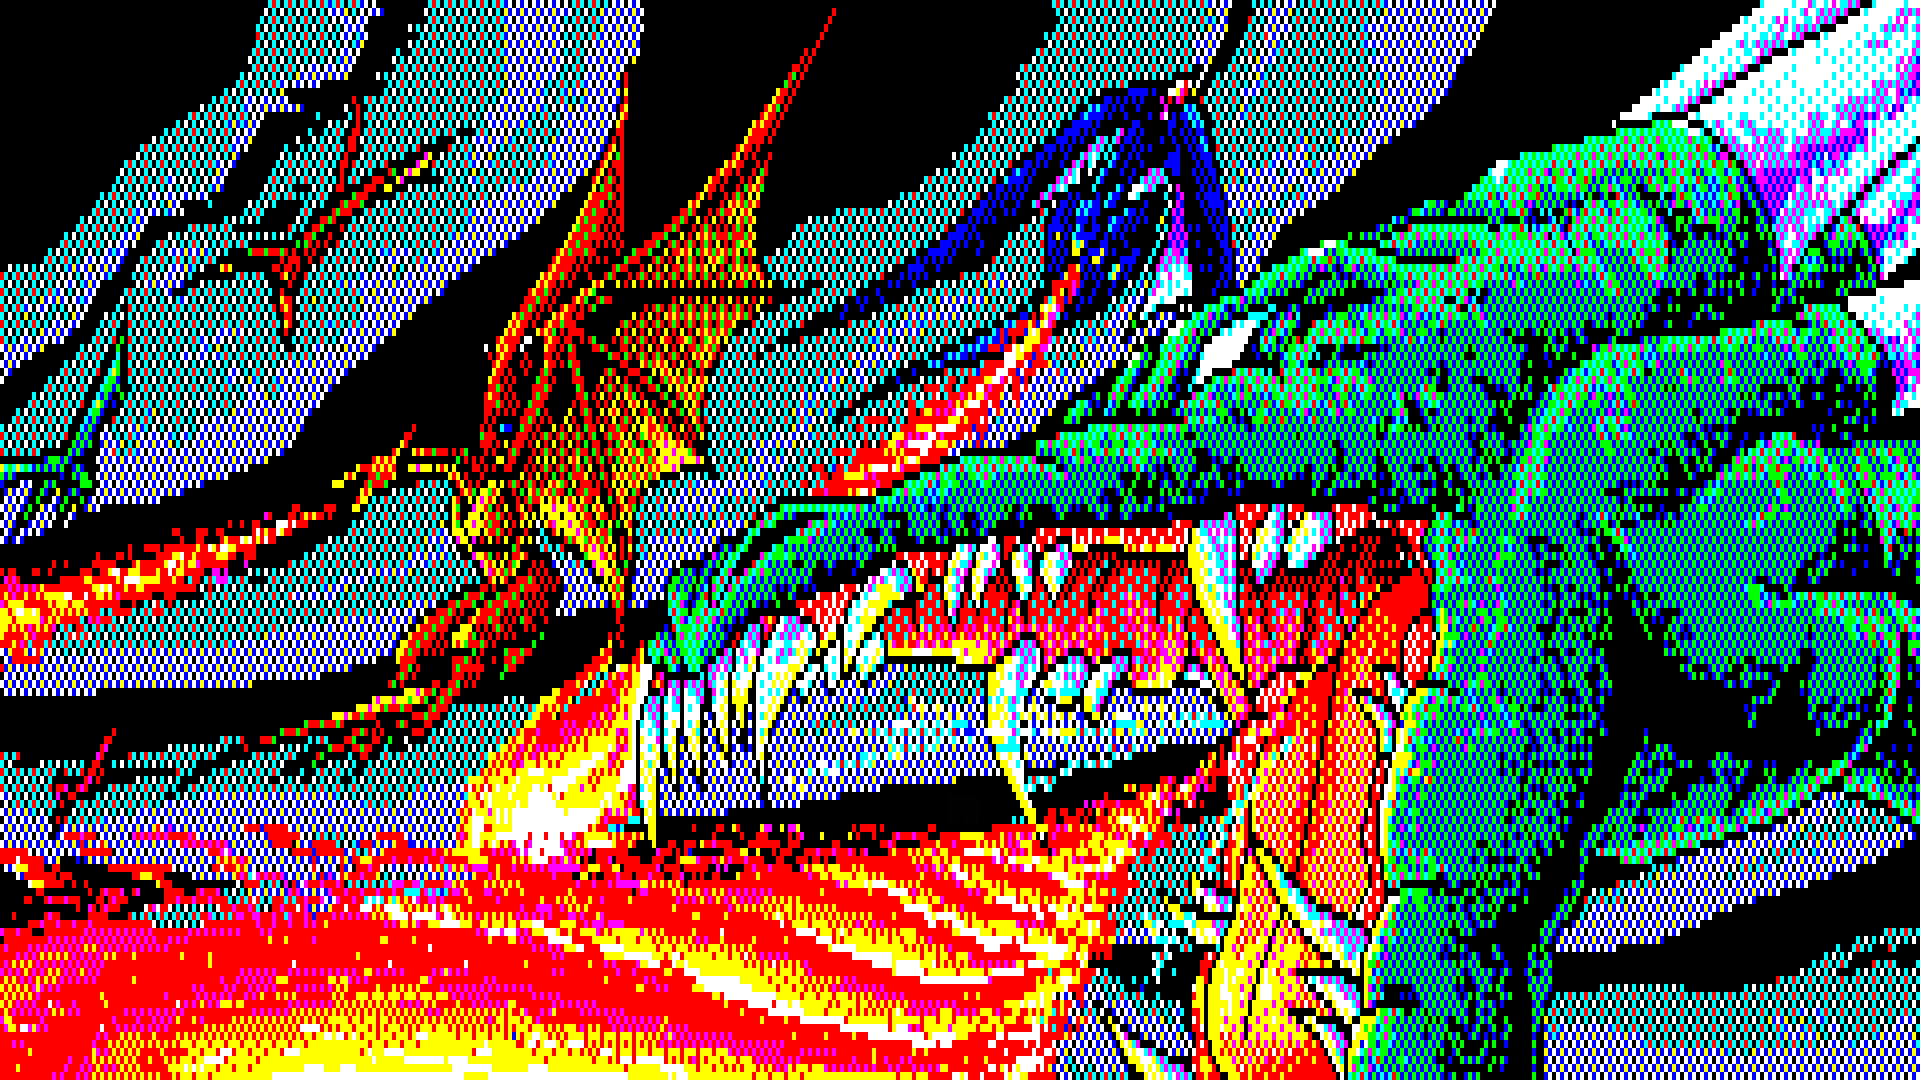 General 1920x1080 PC-98 pixel art dragon Fantasy Battle fire Bishoujo Daizukan fantasy art creature digital art artwork